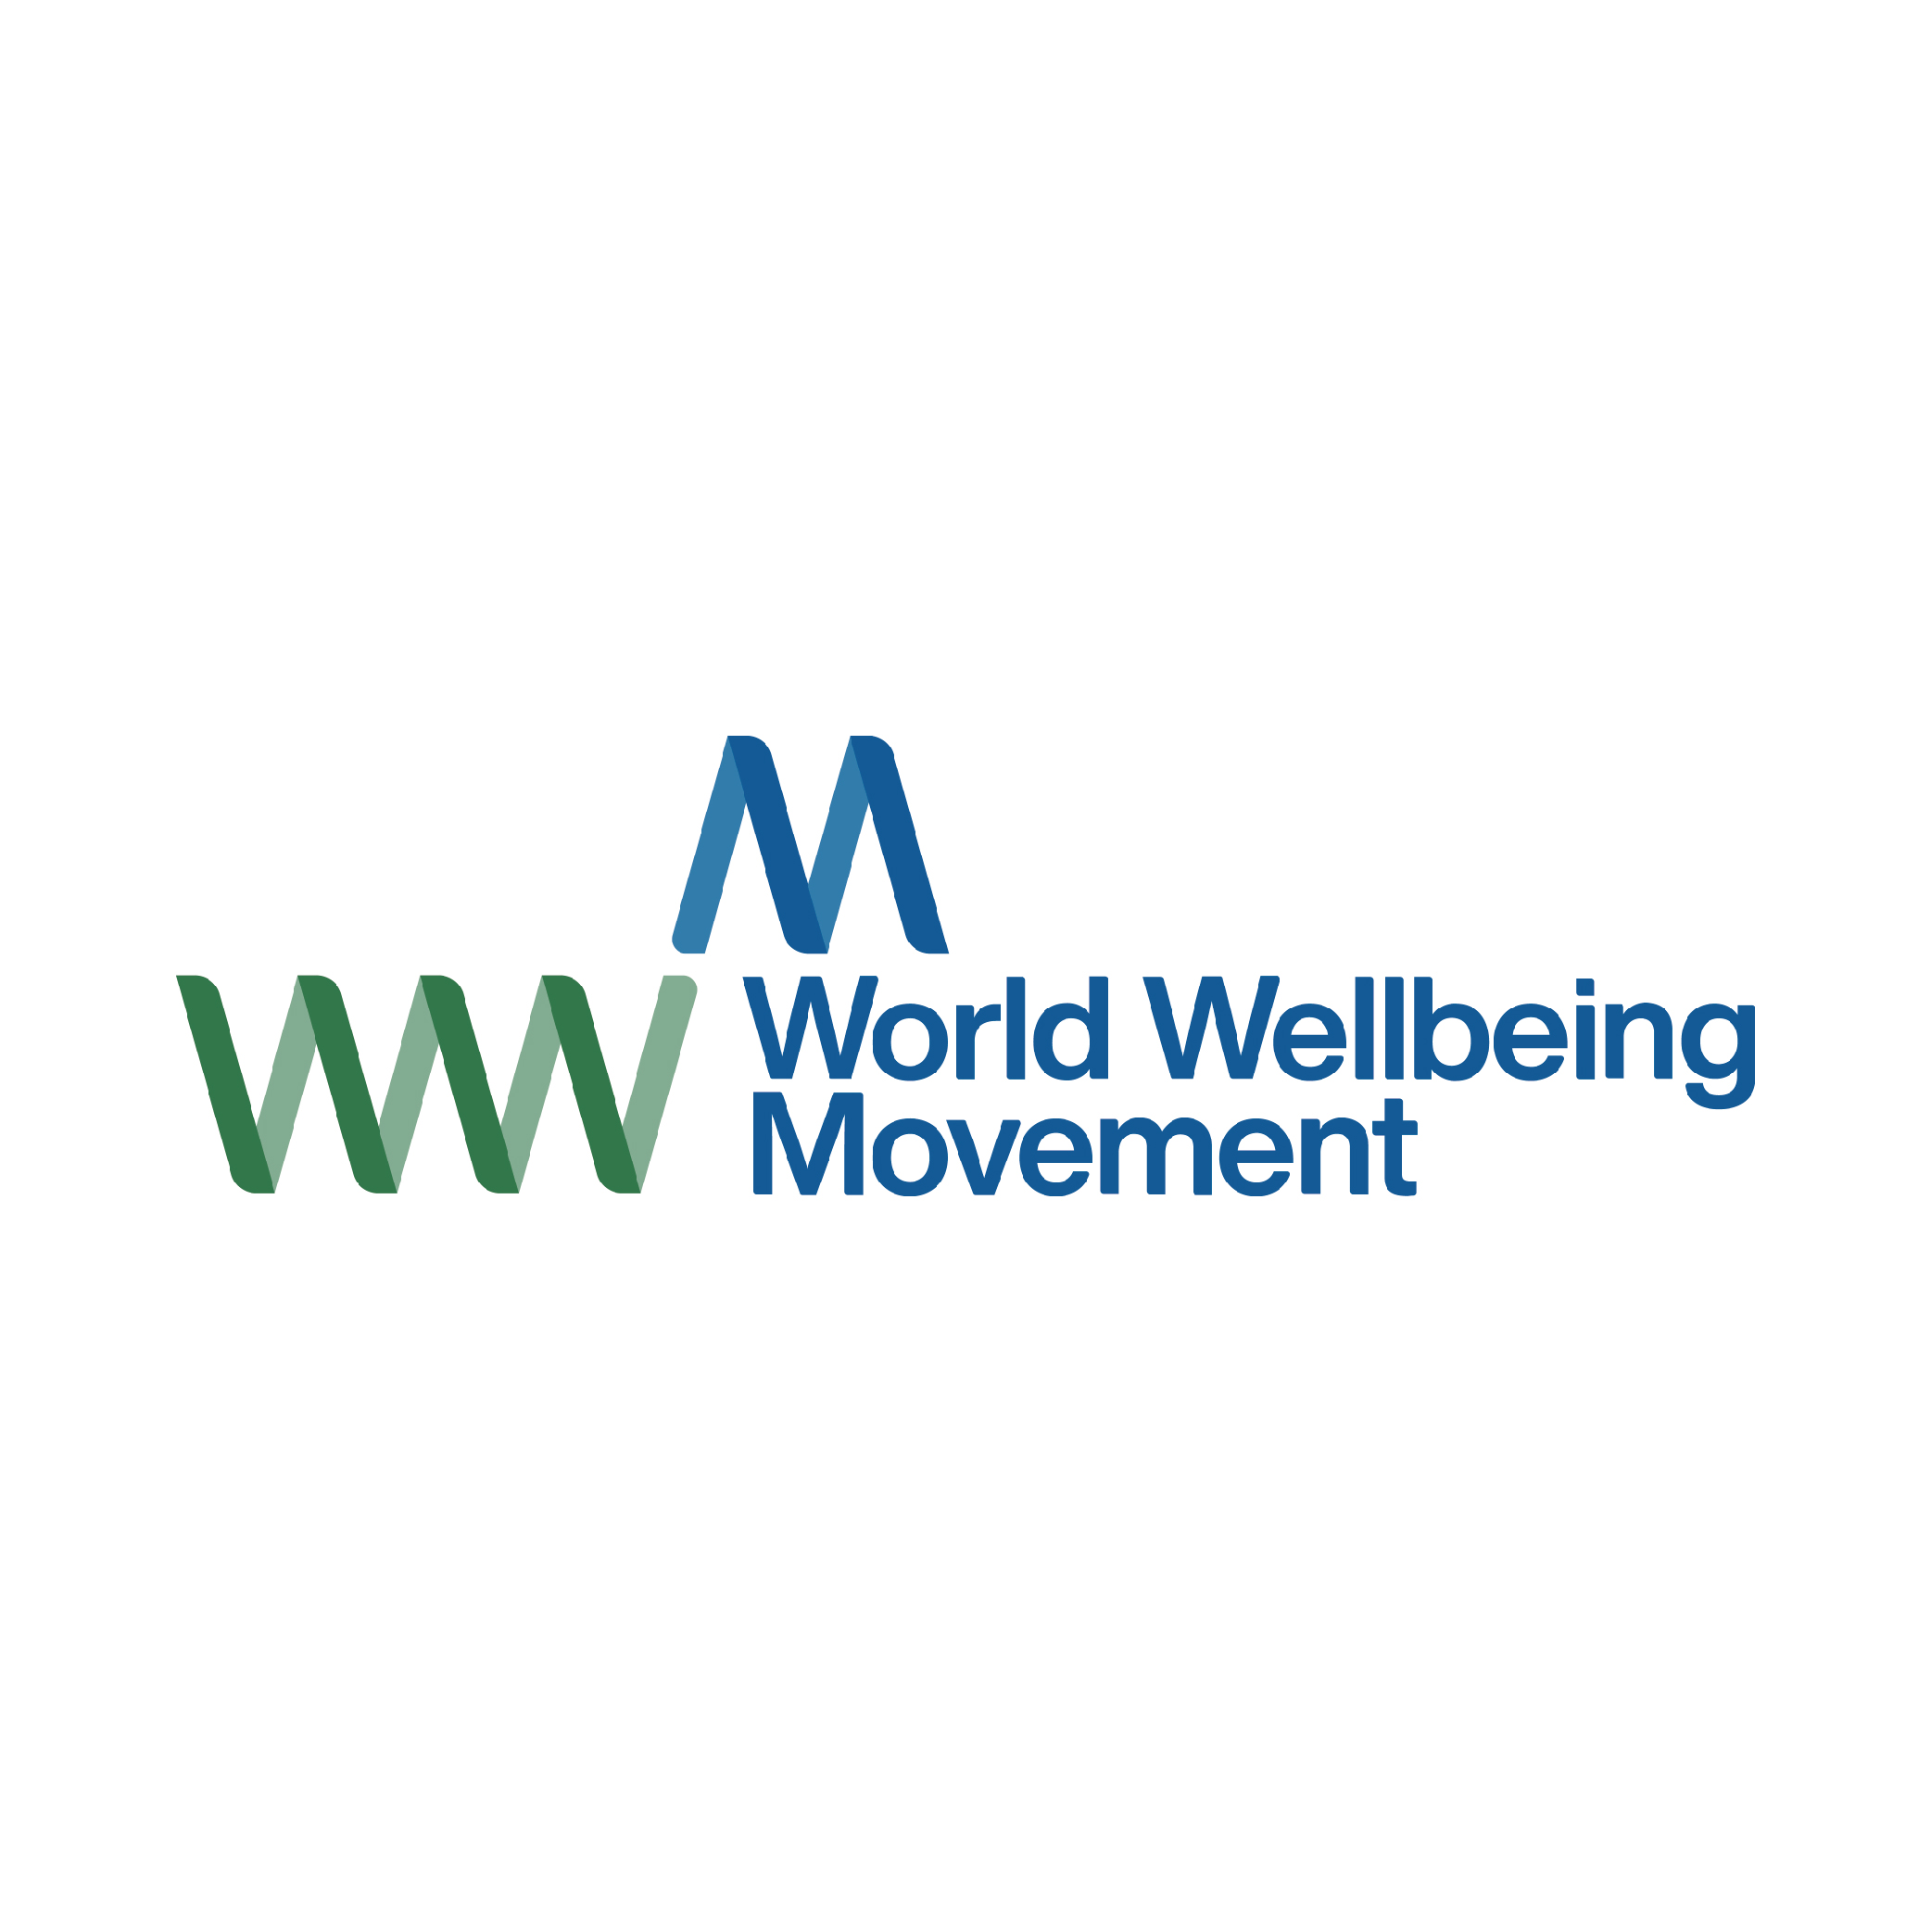 World Wellbeing Movement